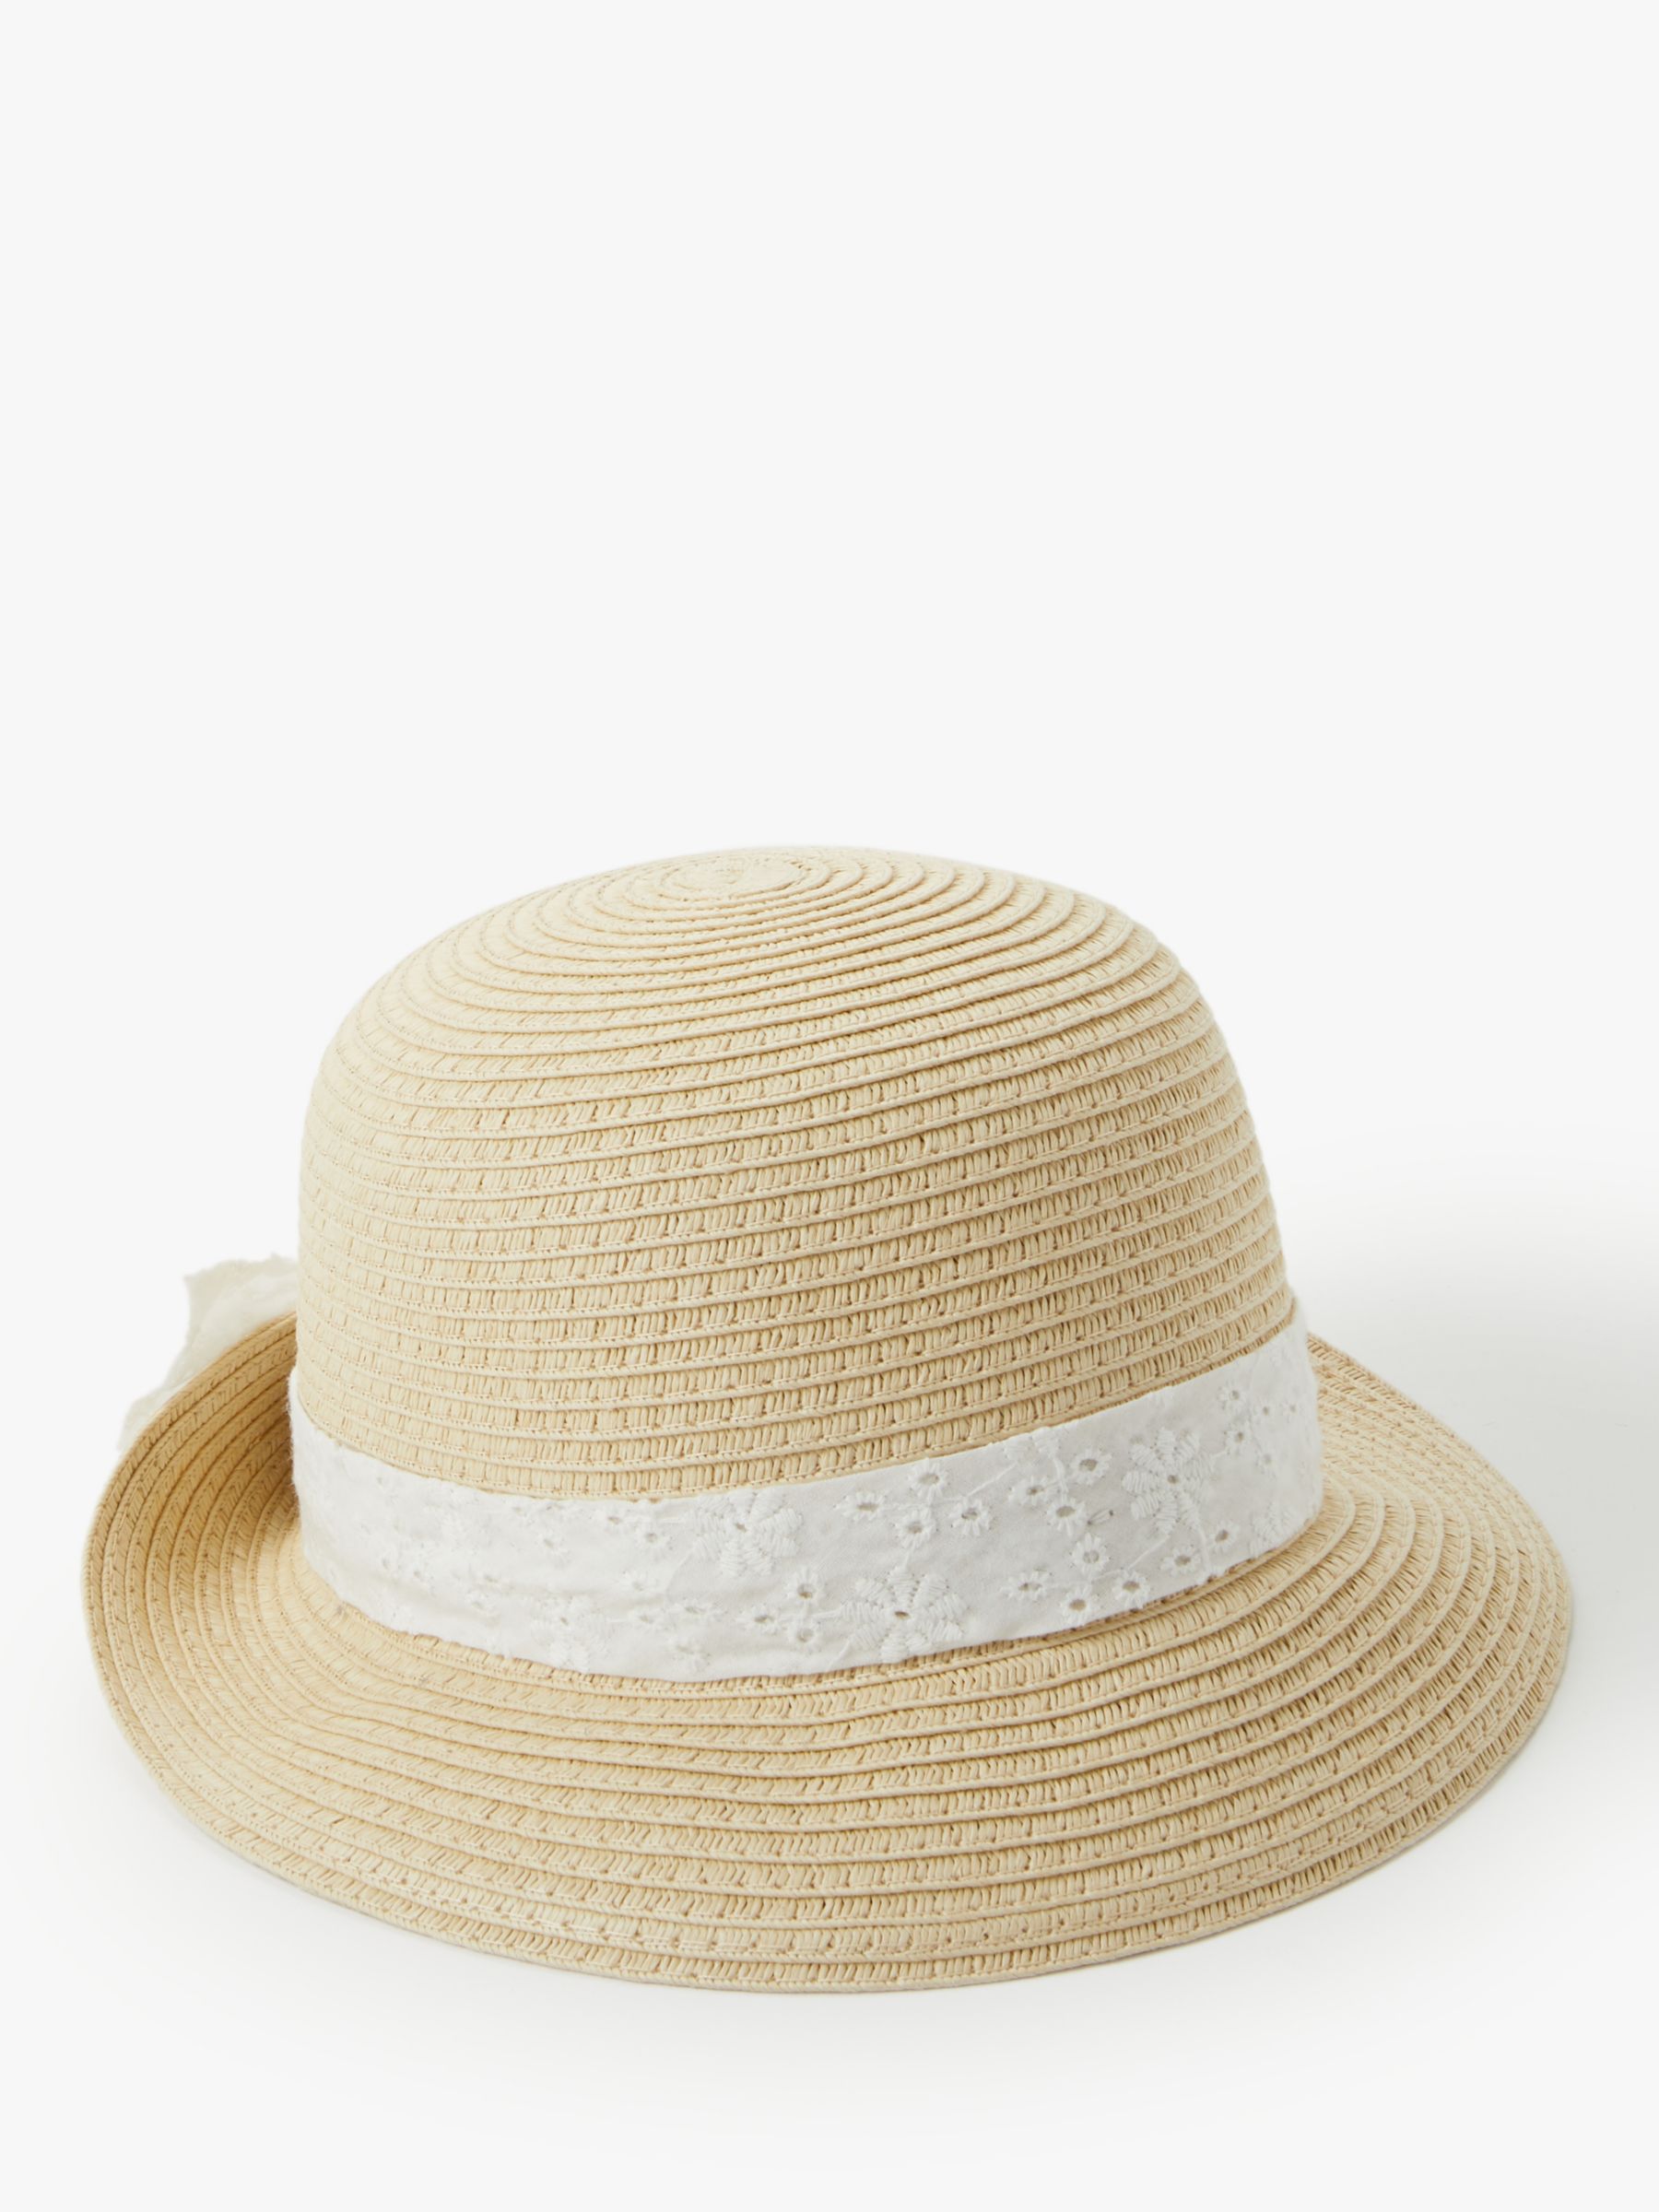 corporate straw hats